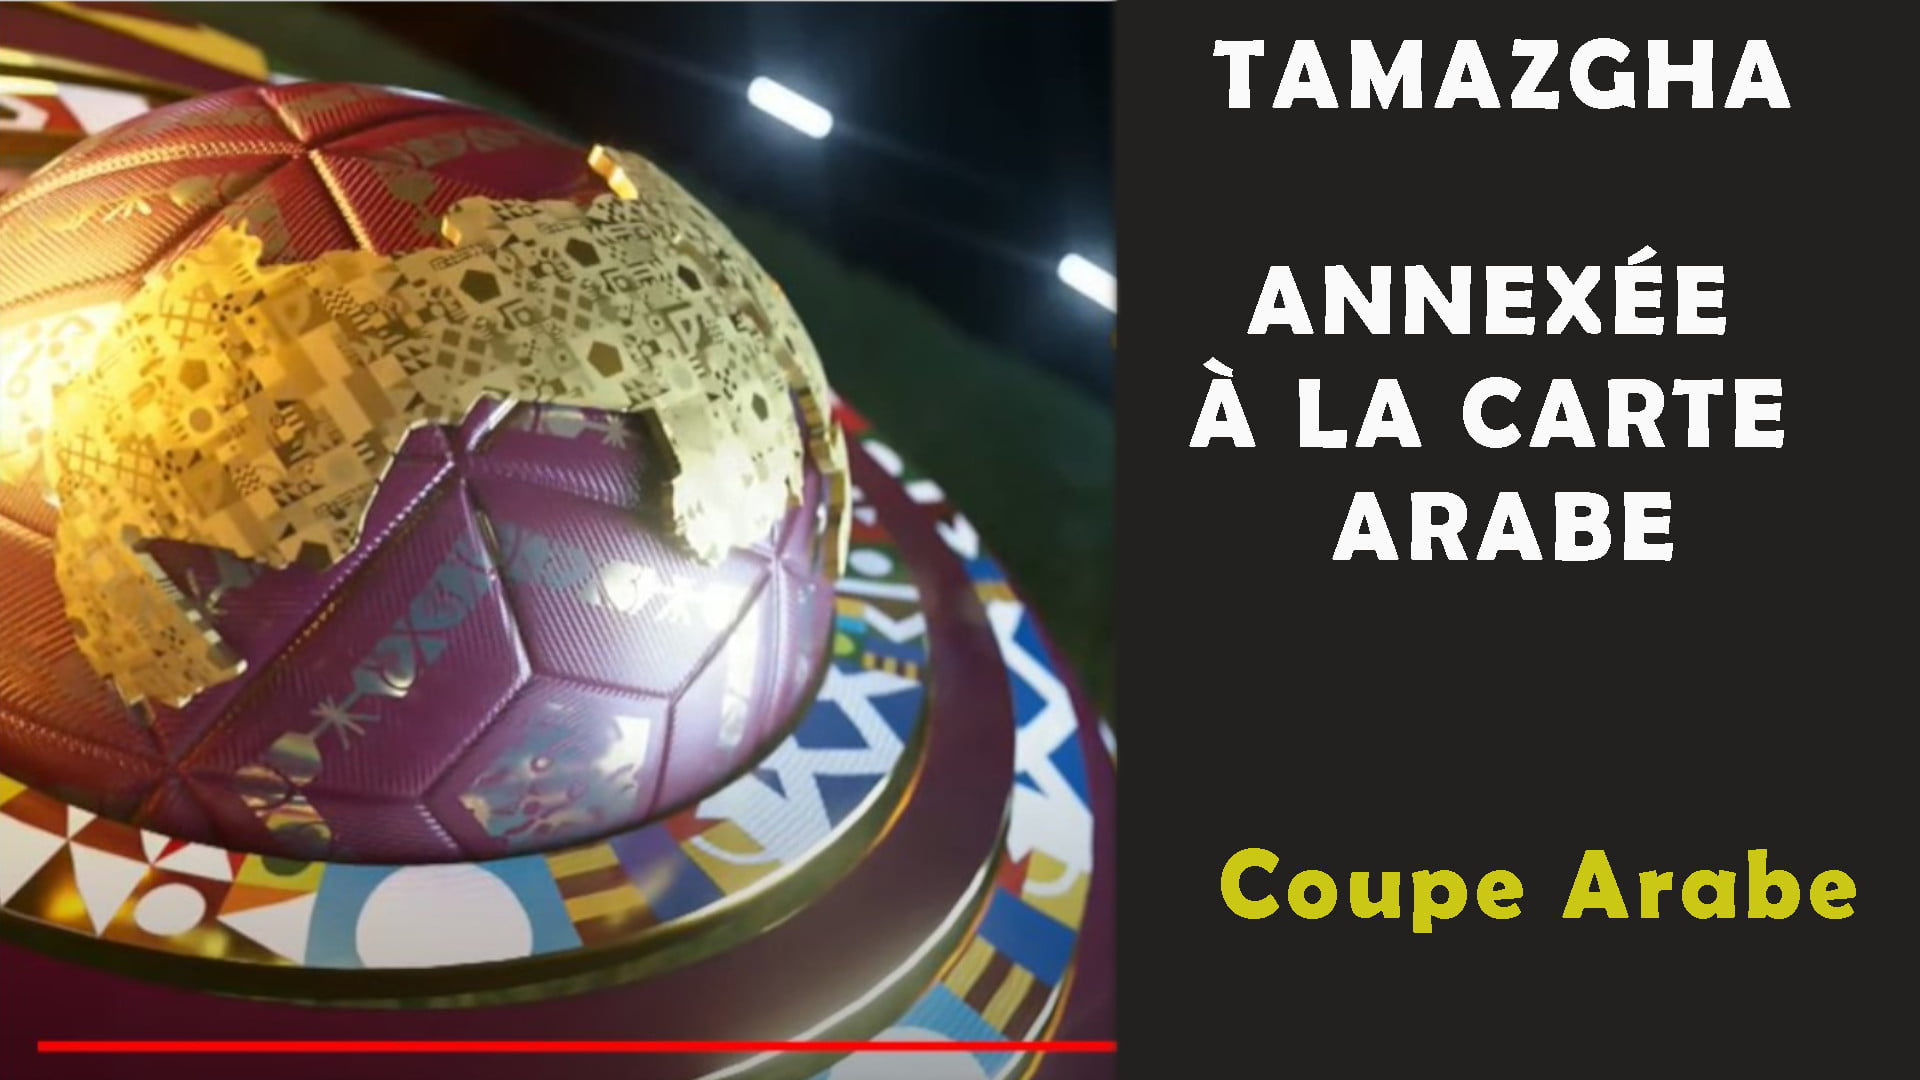 Coupe Arabe - Tamazgha Annexée